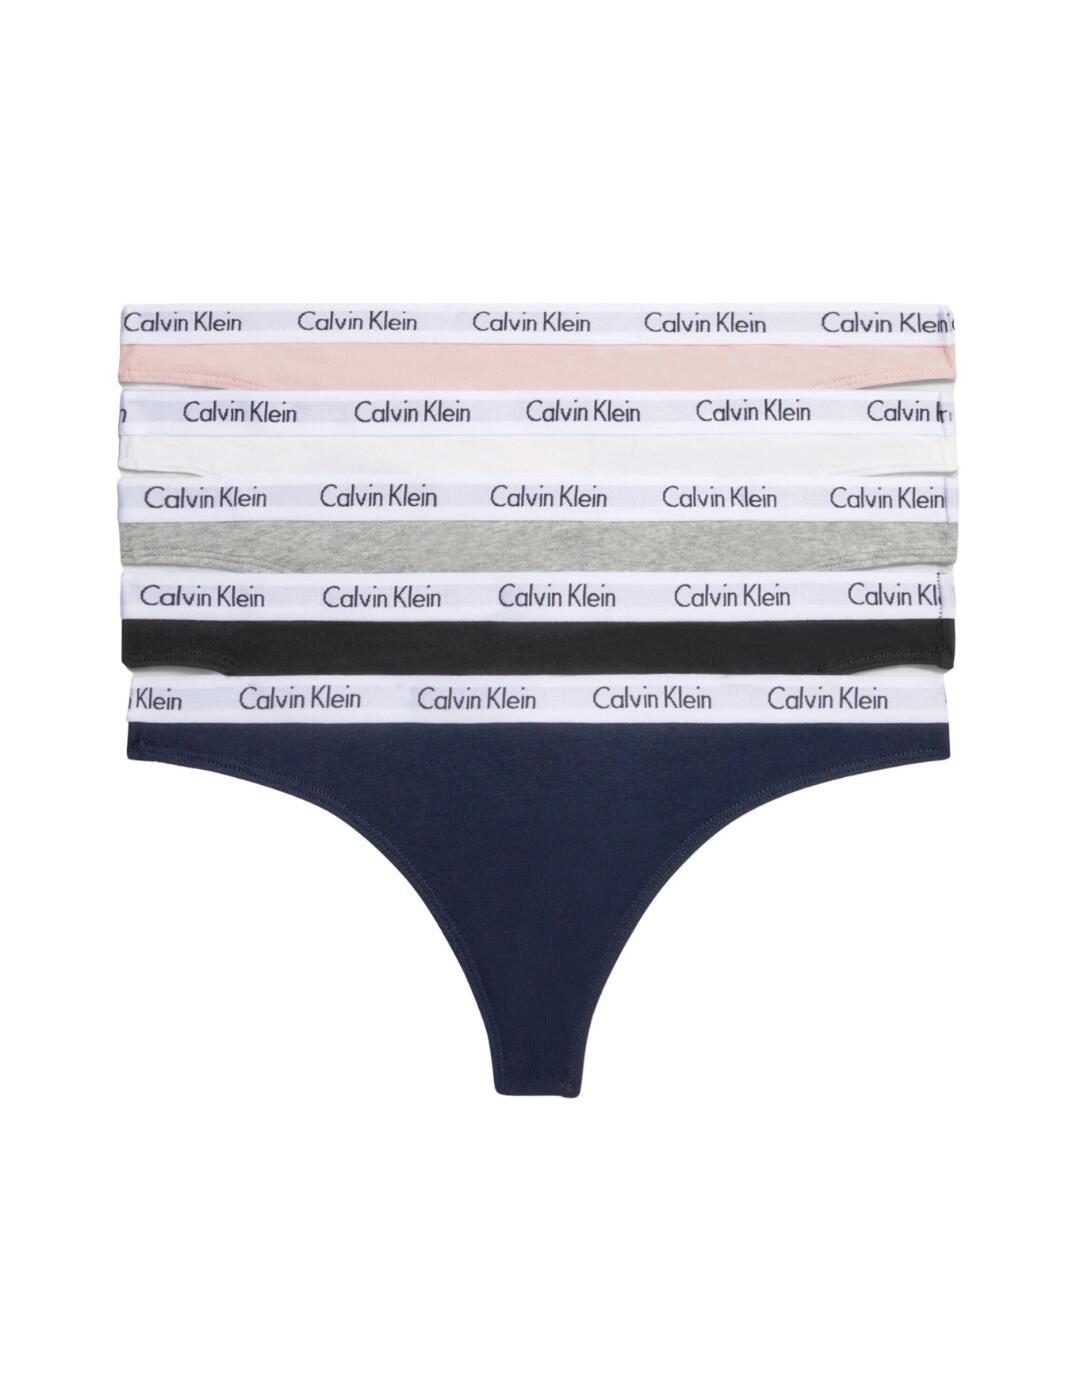 Calvin Klein Carousel Thongs 5 Pack Black/White /Grey Heather/Nymphs Thigh/Shoreline 